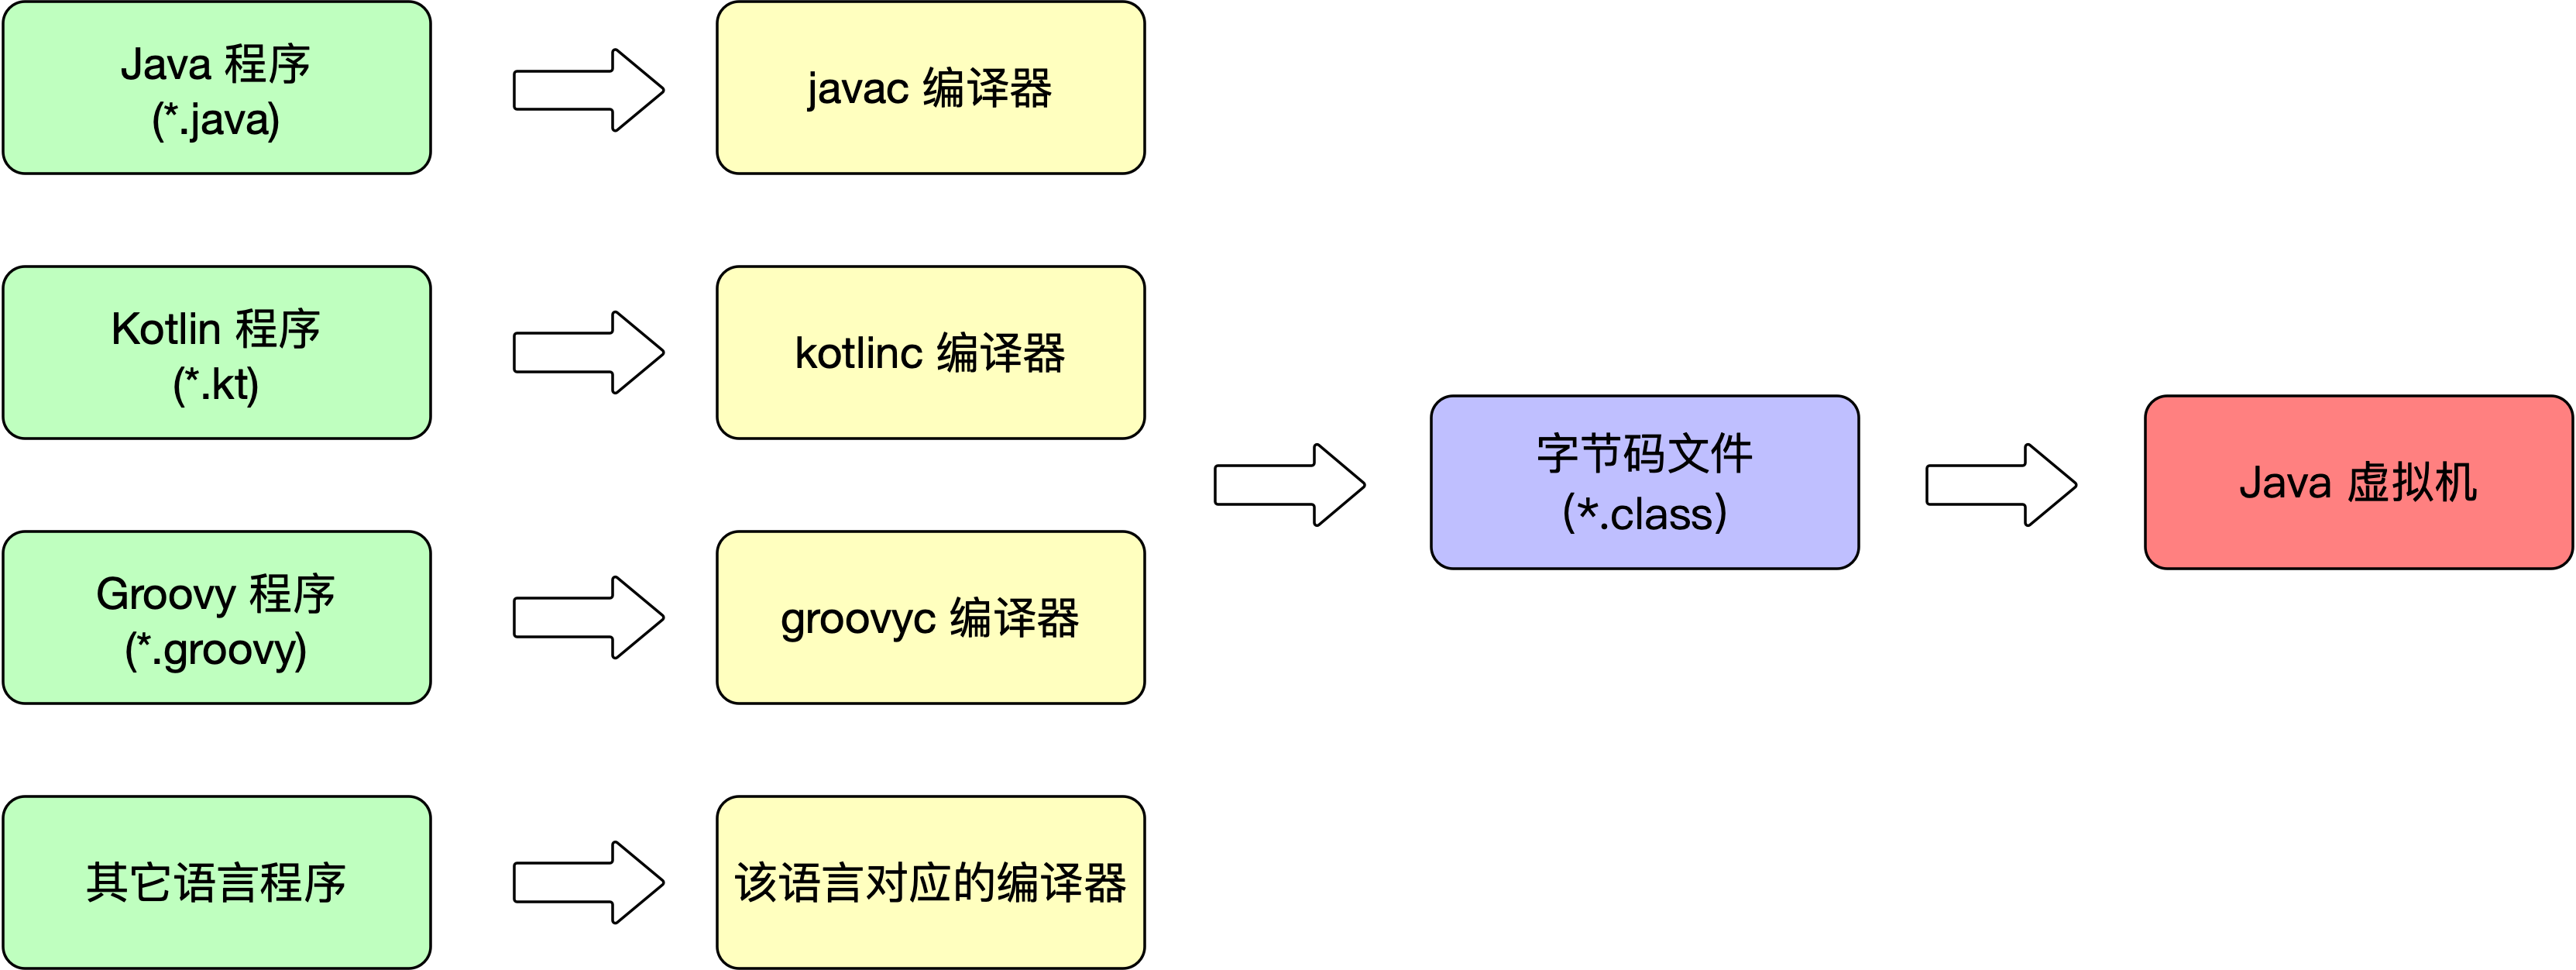 javasec(二)class文件结构